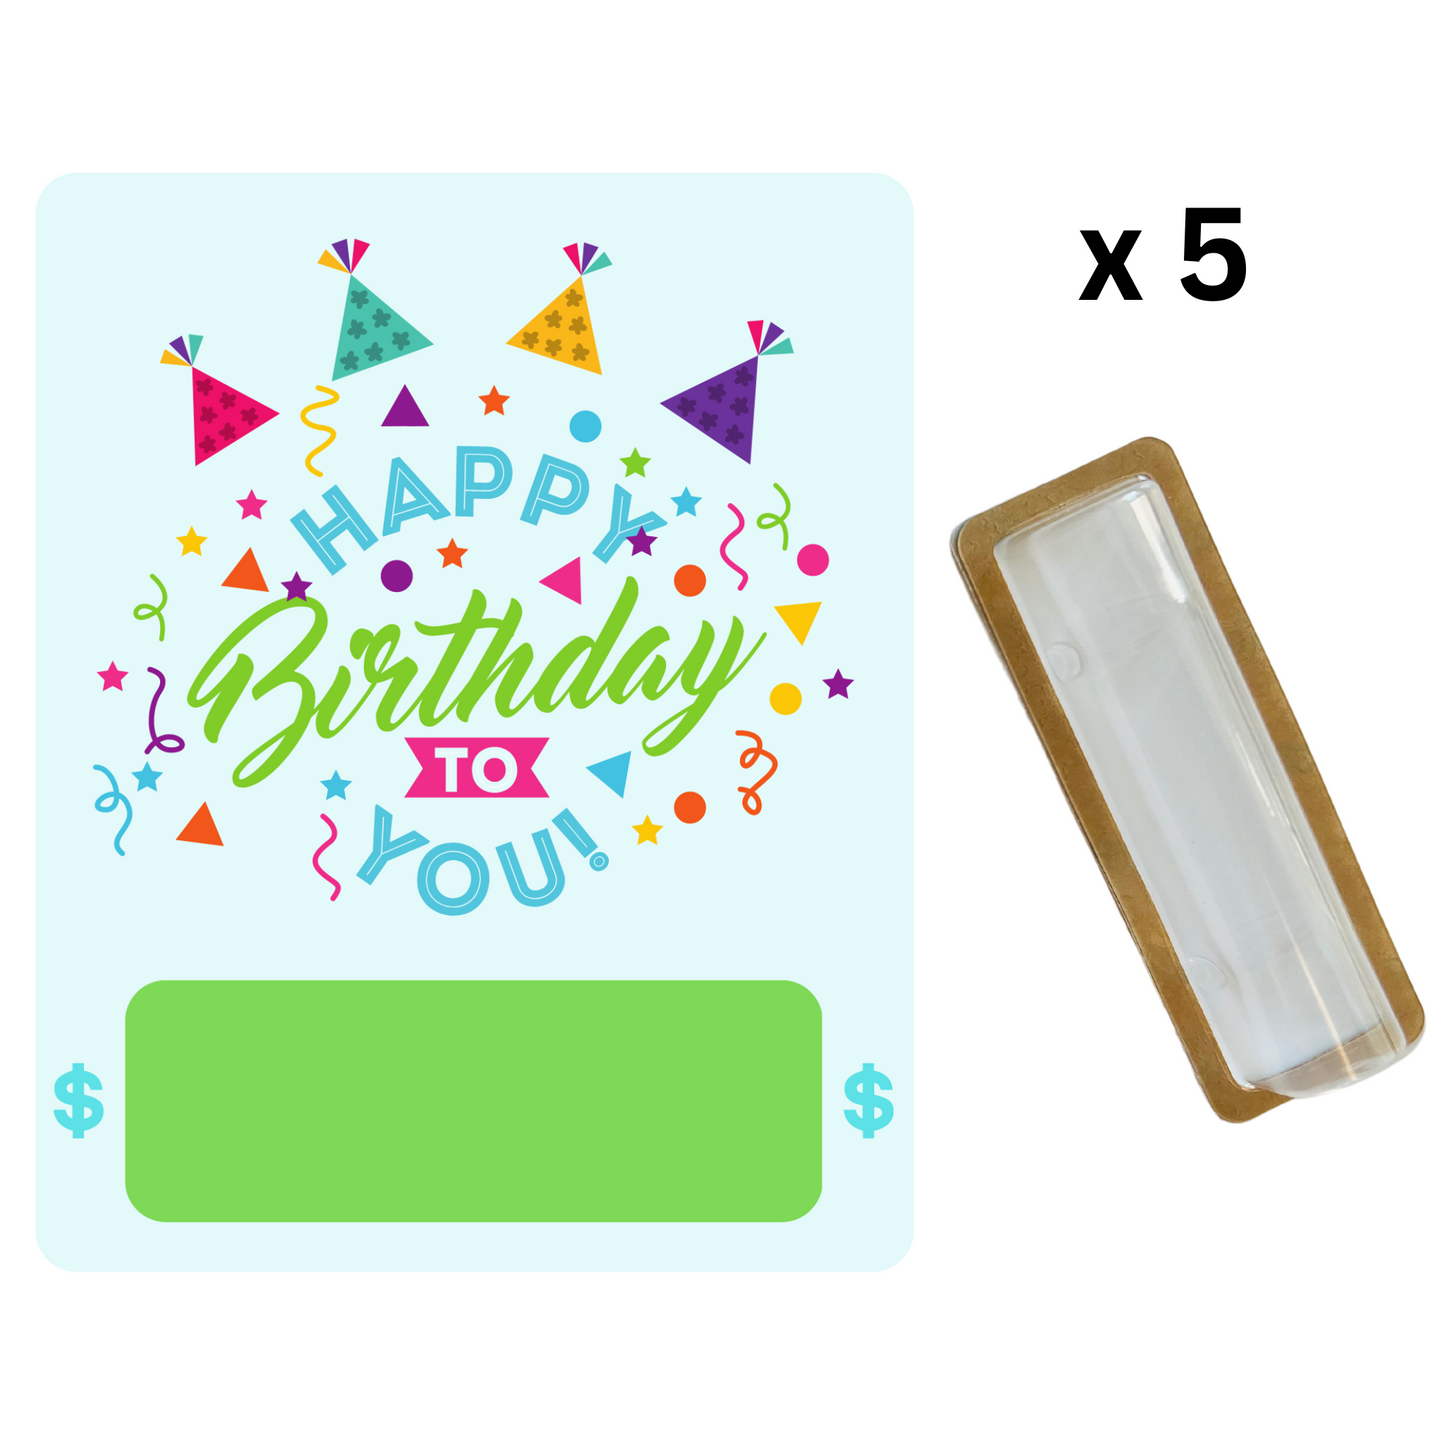 Bundles - Personalized Money holder/gift cards- Sets